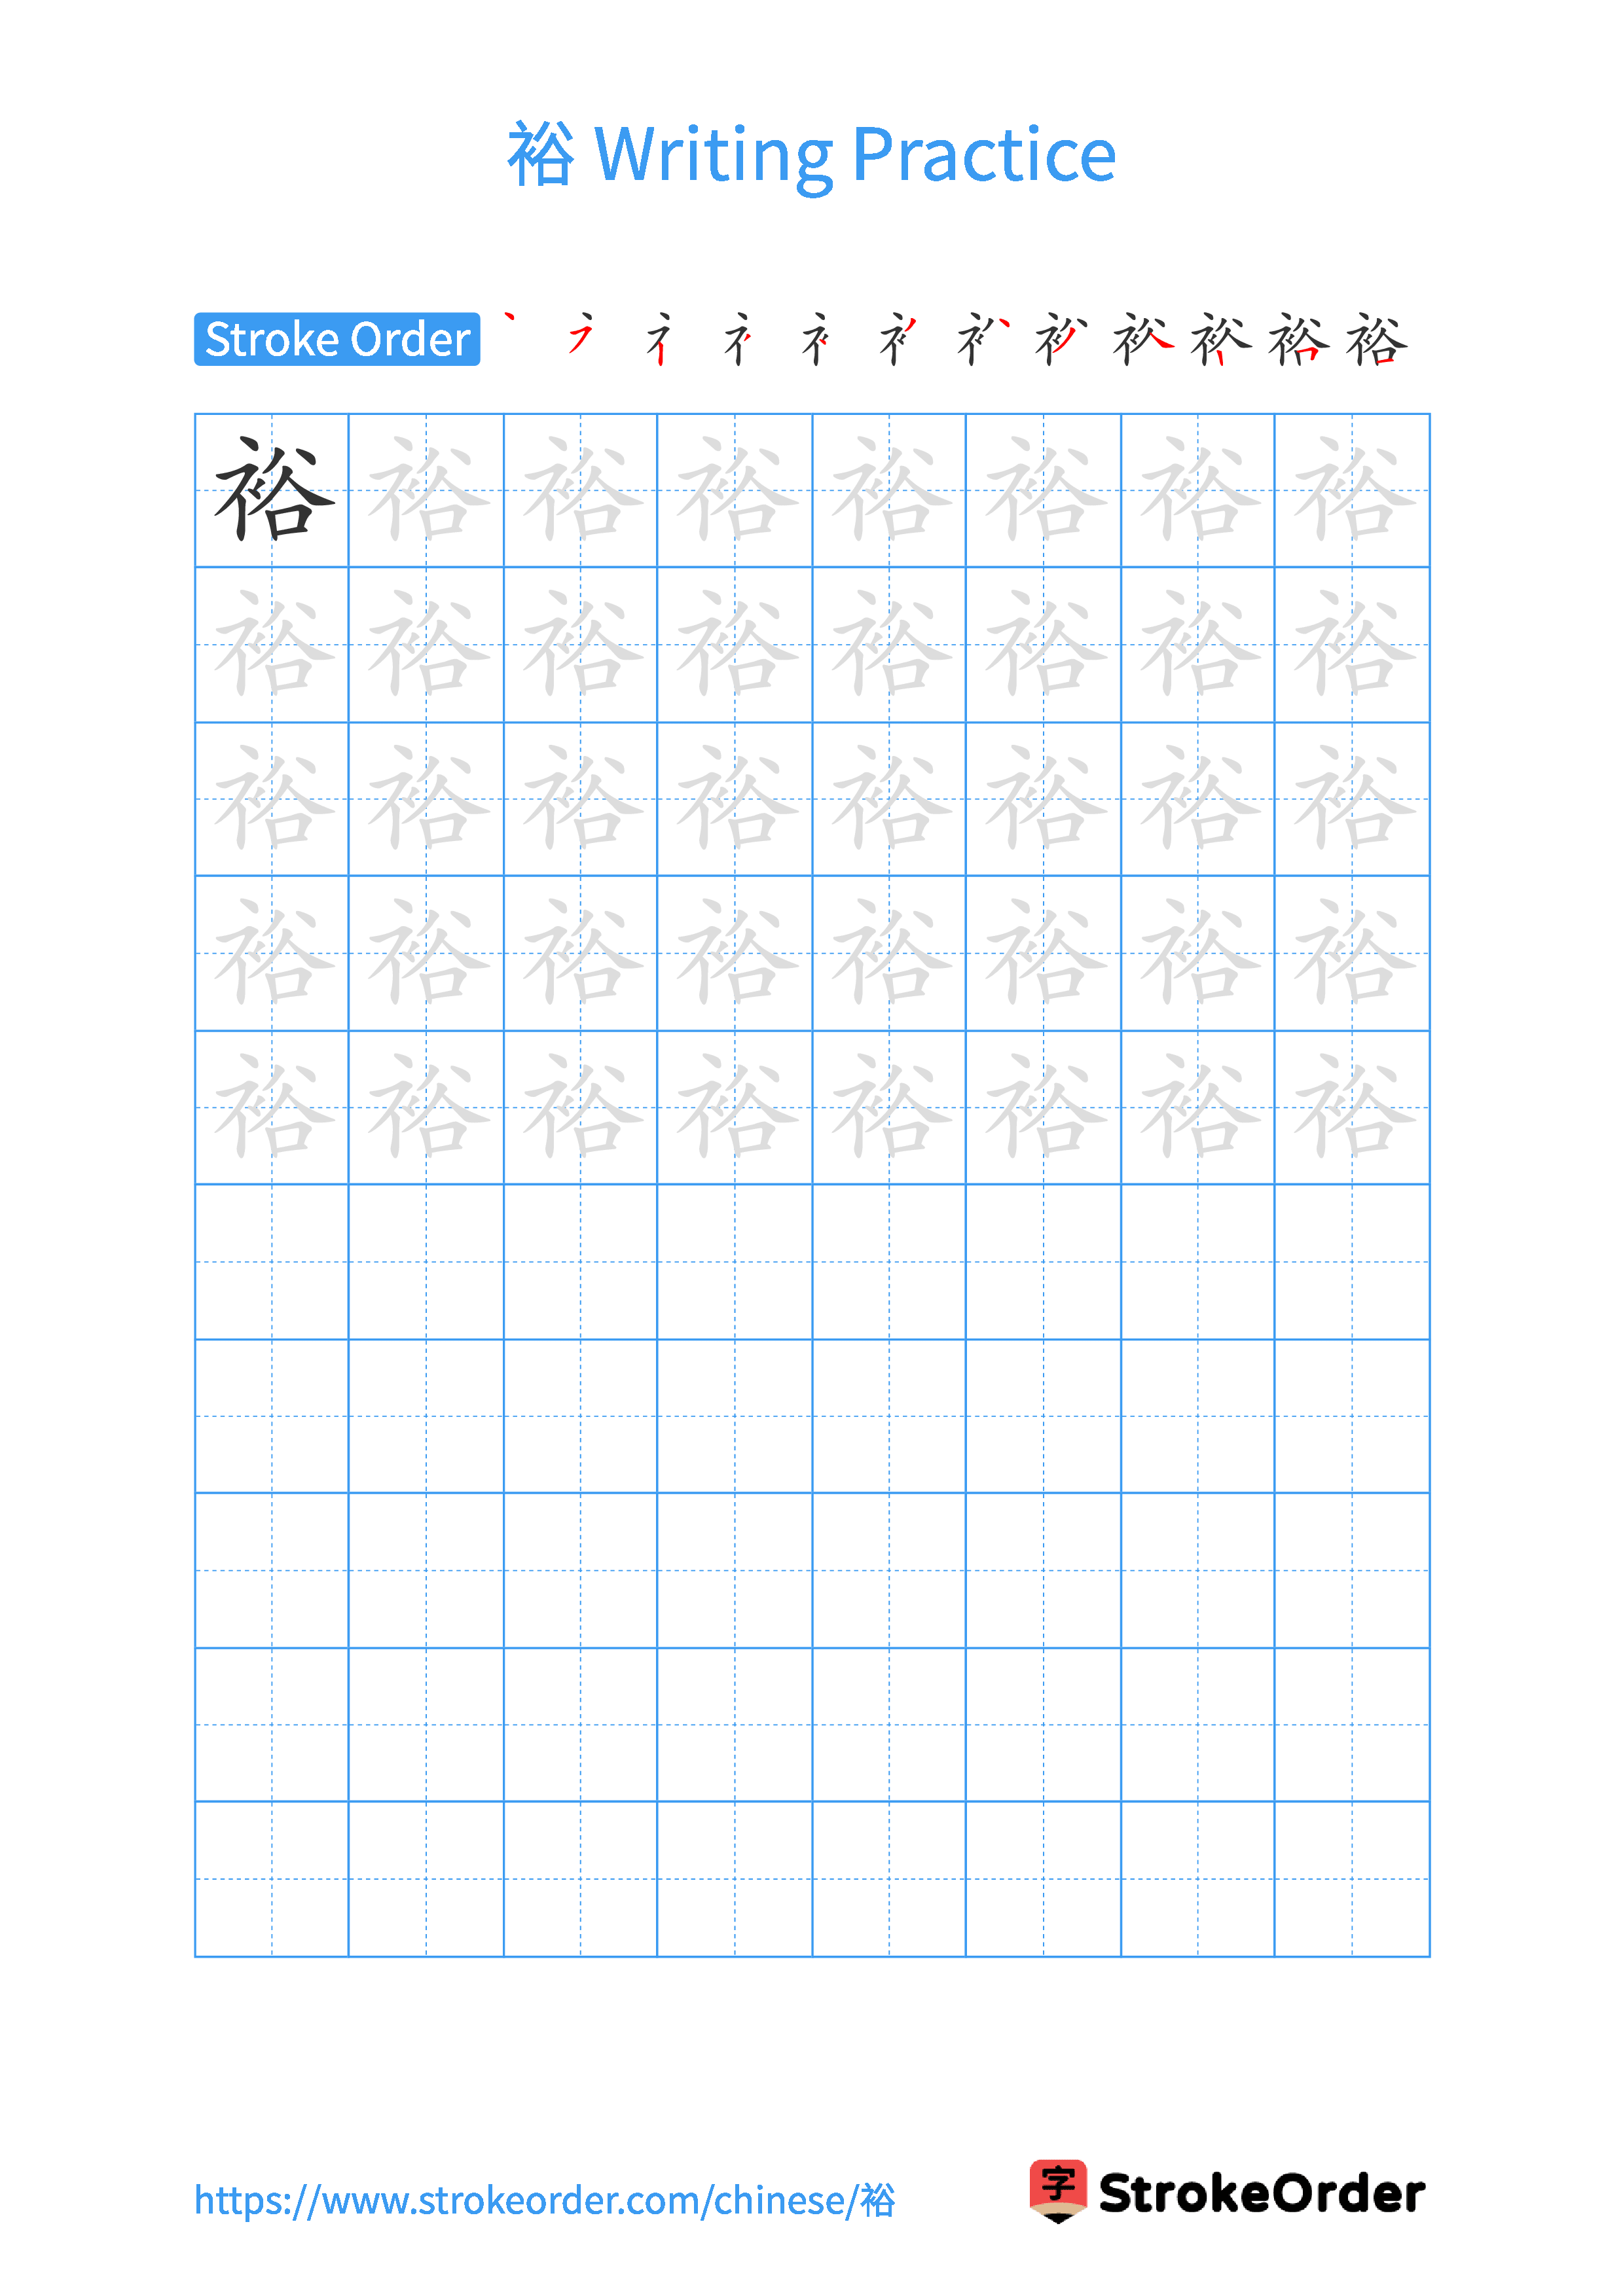 Printable Handwriting Practice Worksheet of the Chinese character 裕 in Portrait Orientation (Tian Zi Ge)